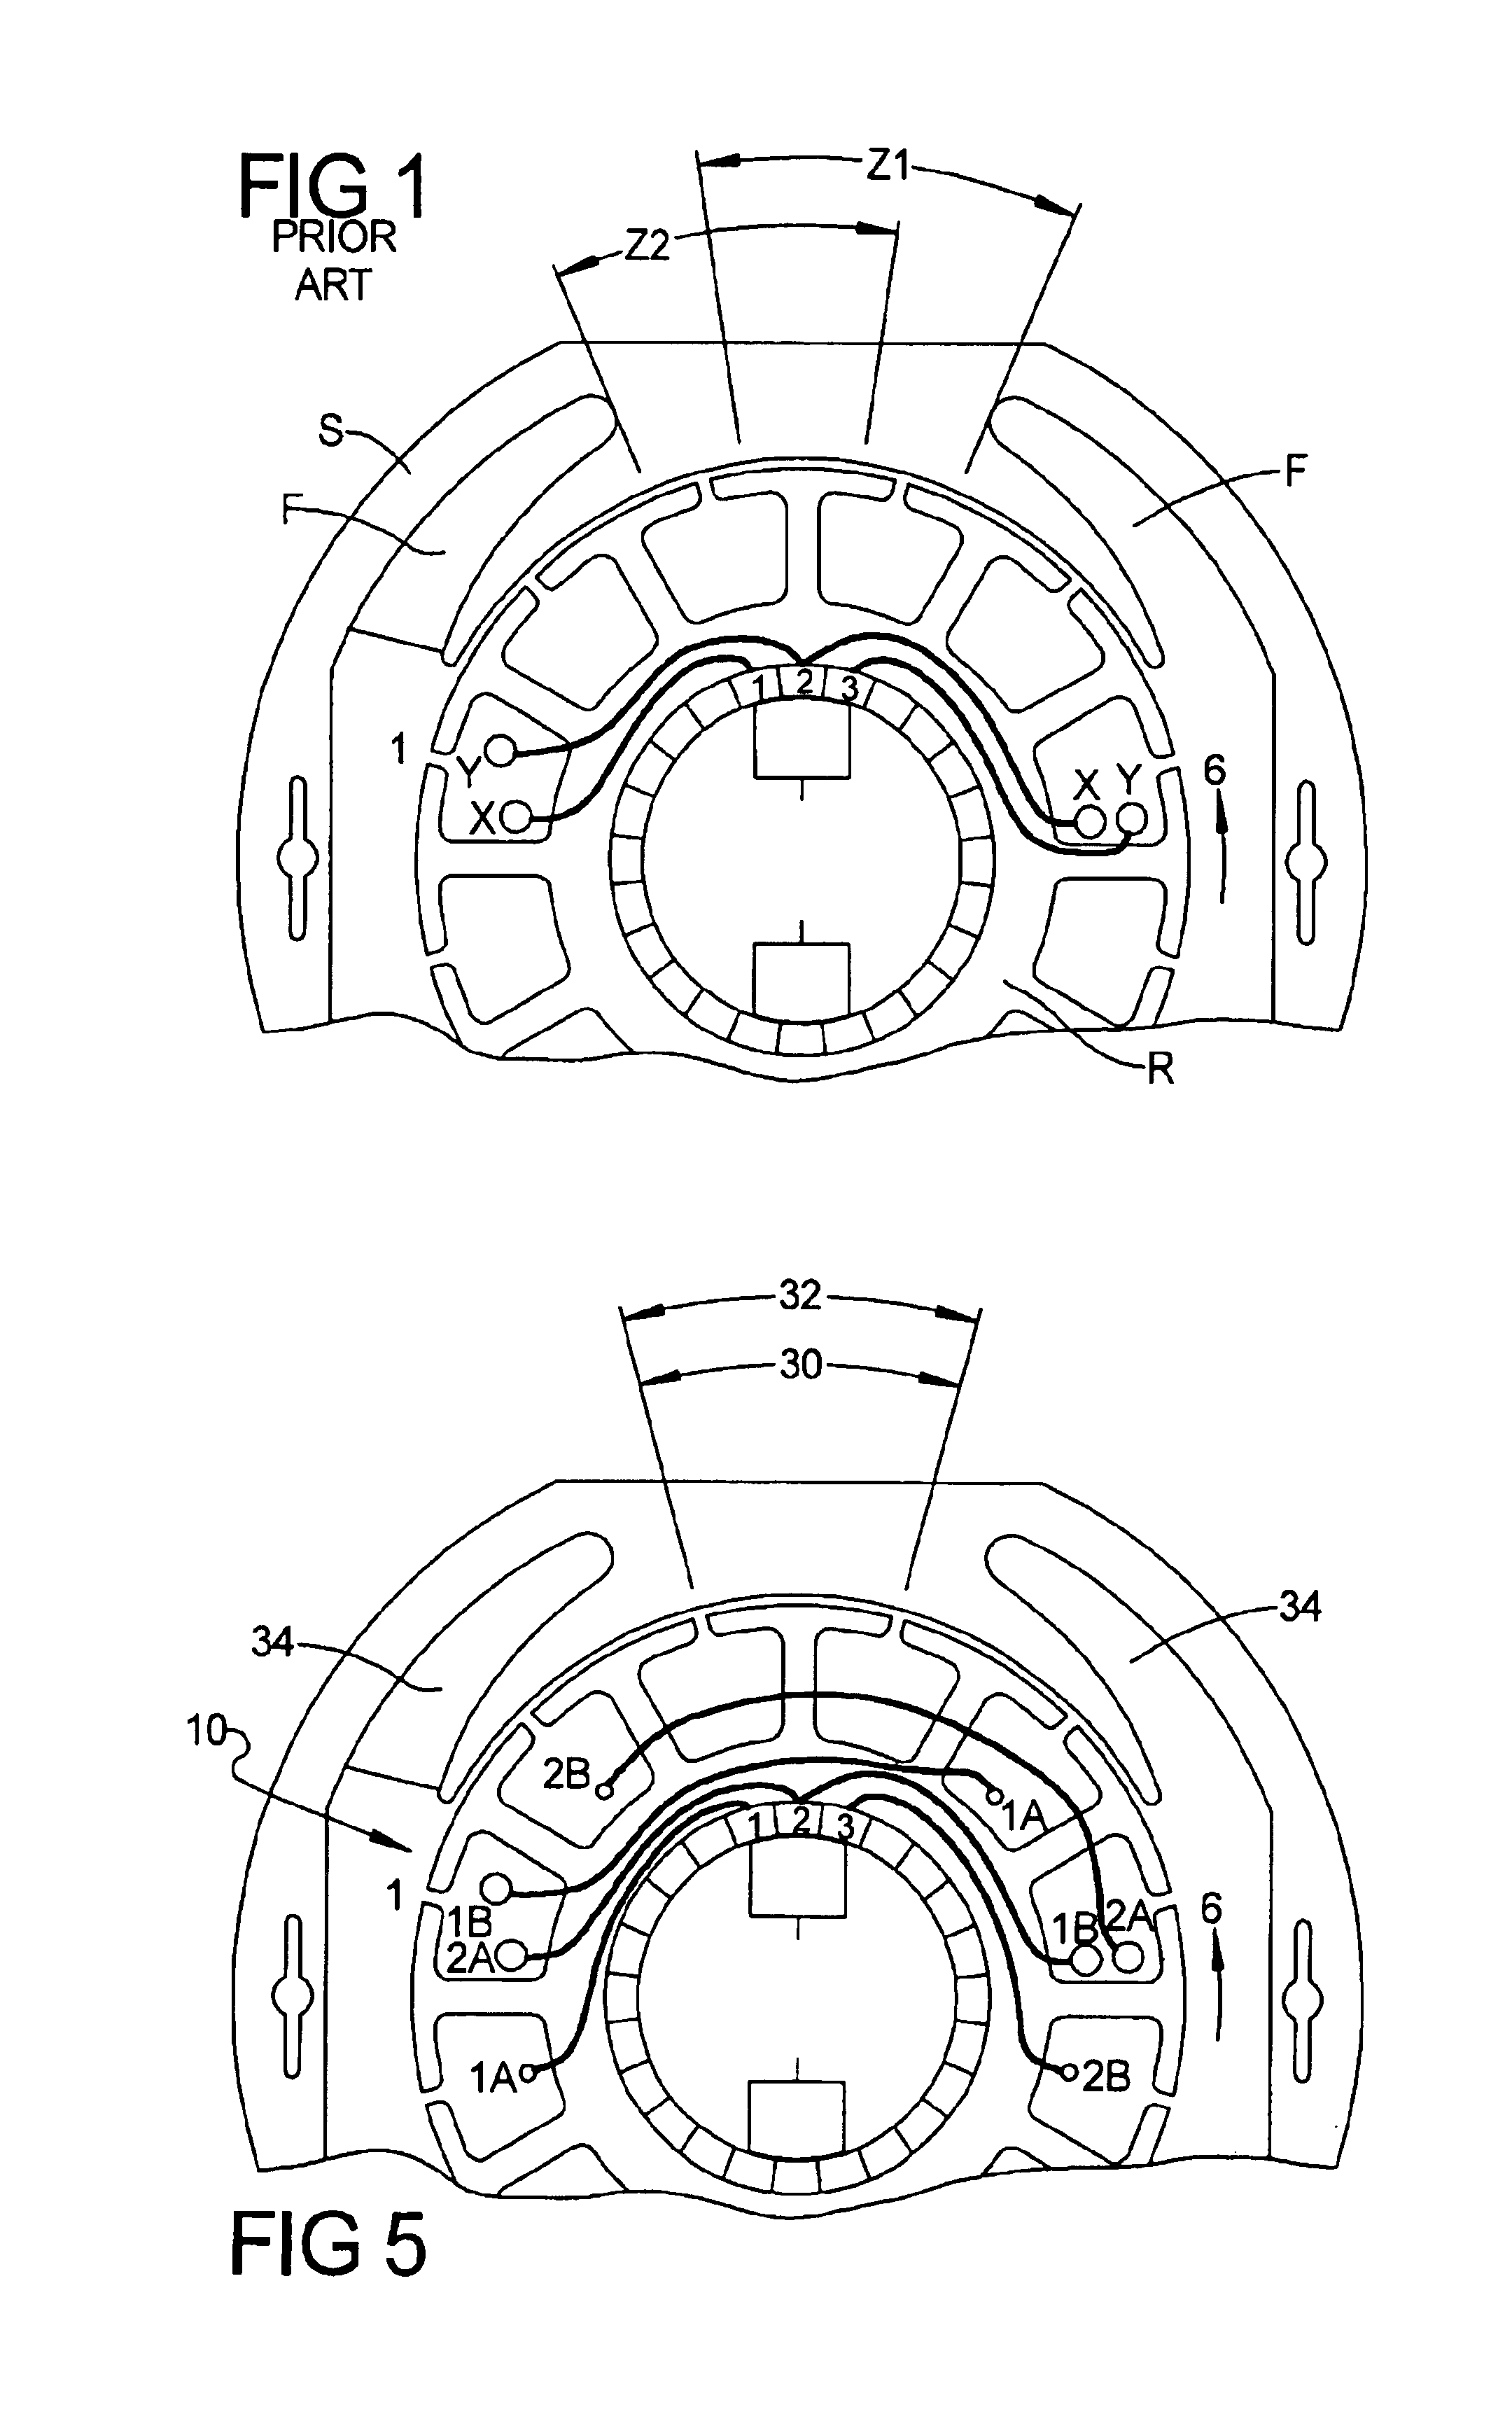 Motor armature having distributed windings for reducing arcing